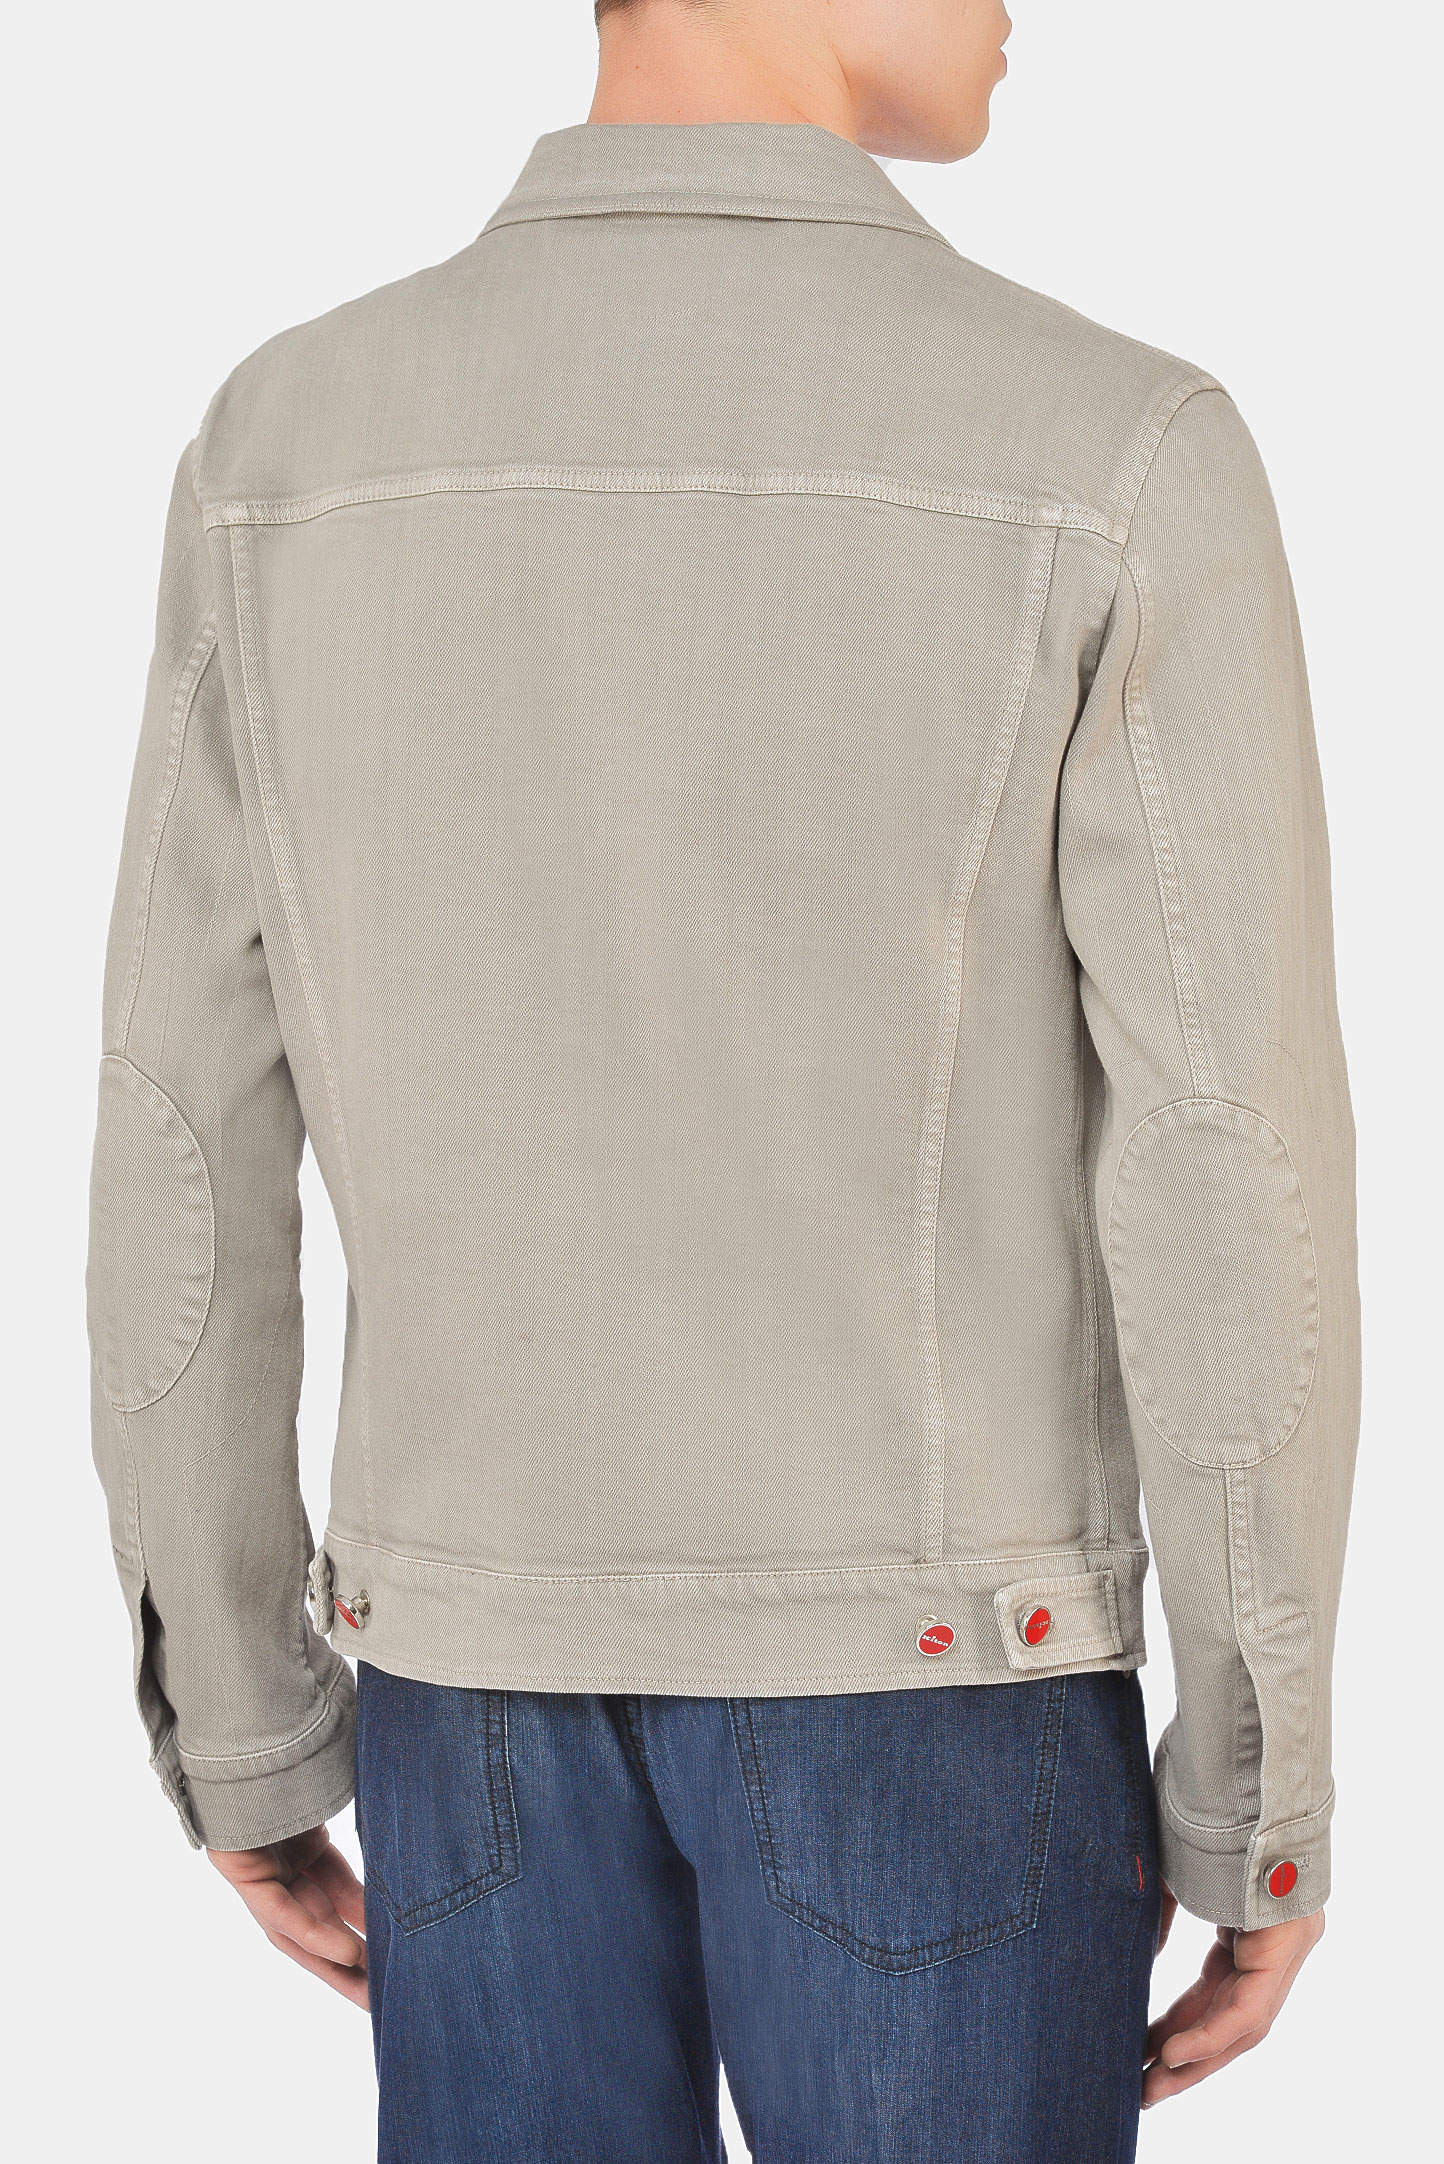 Куртка KITON UW0872V07T680, цвет: Серый, Мужской